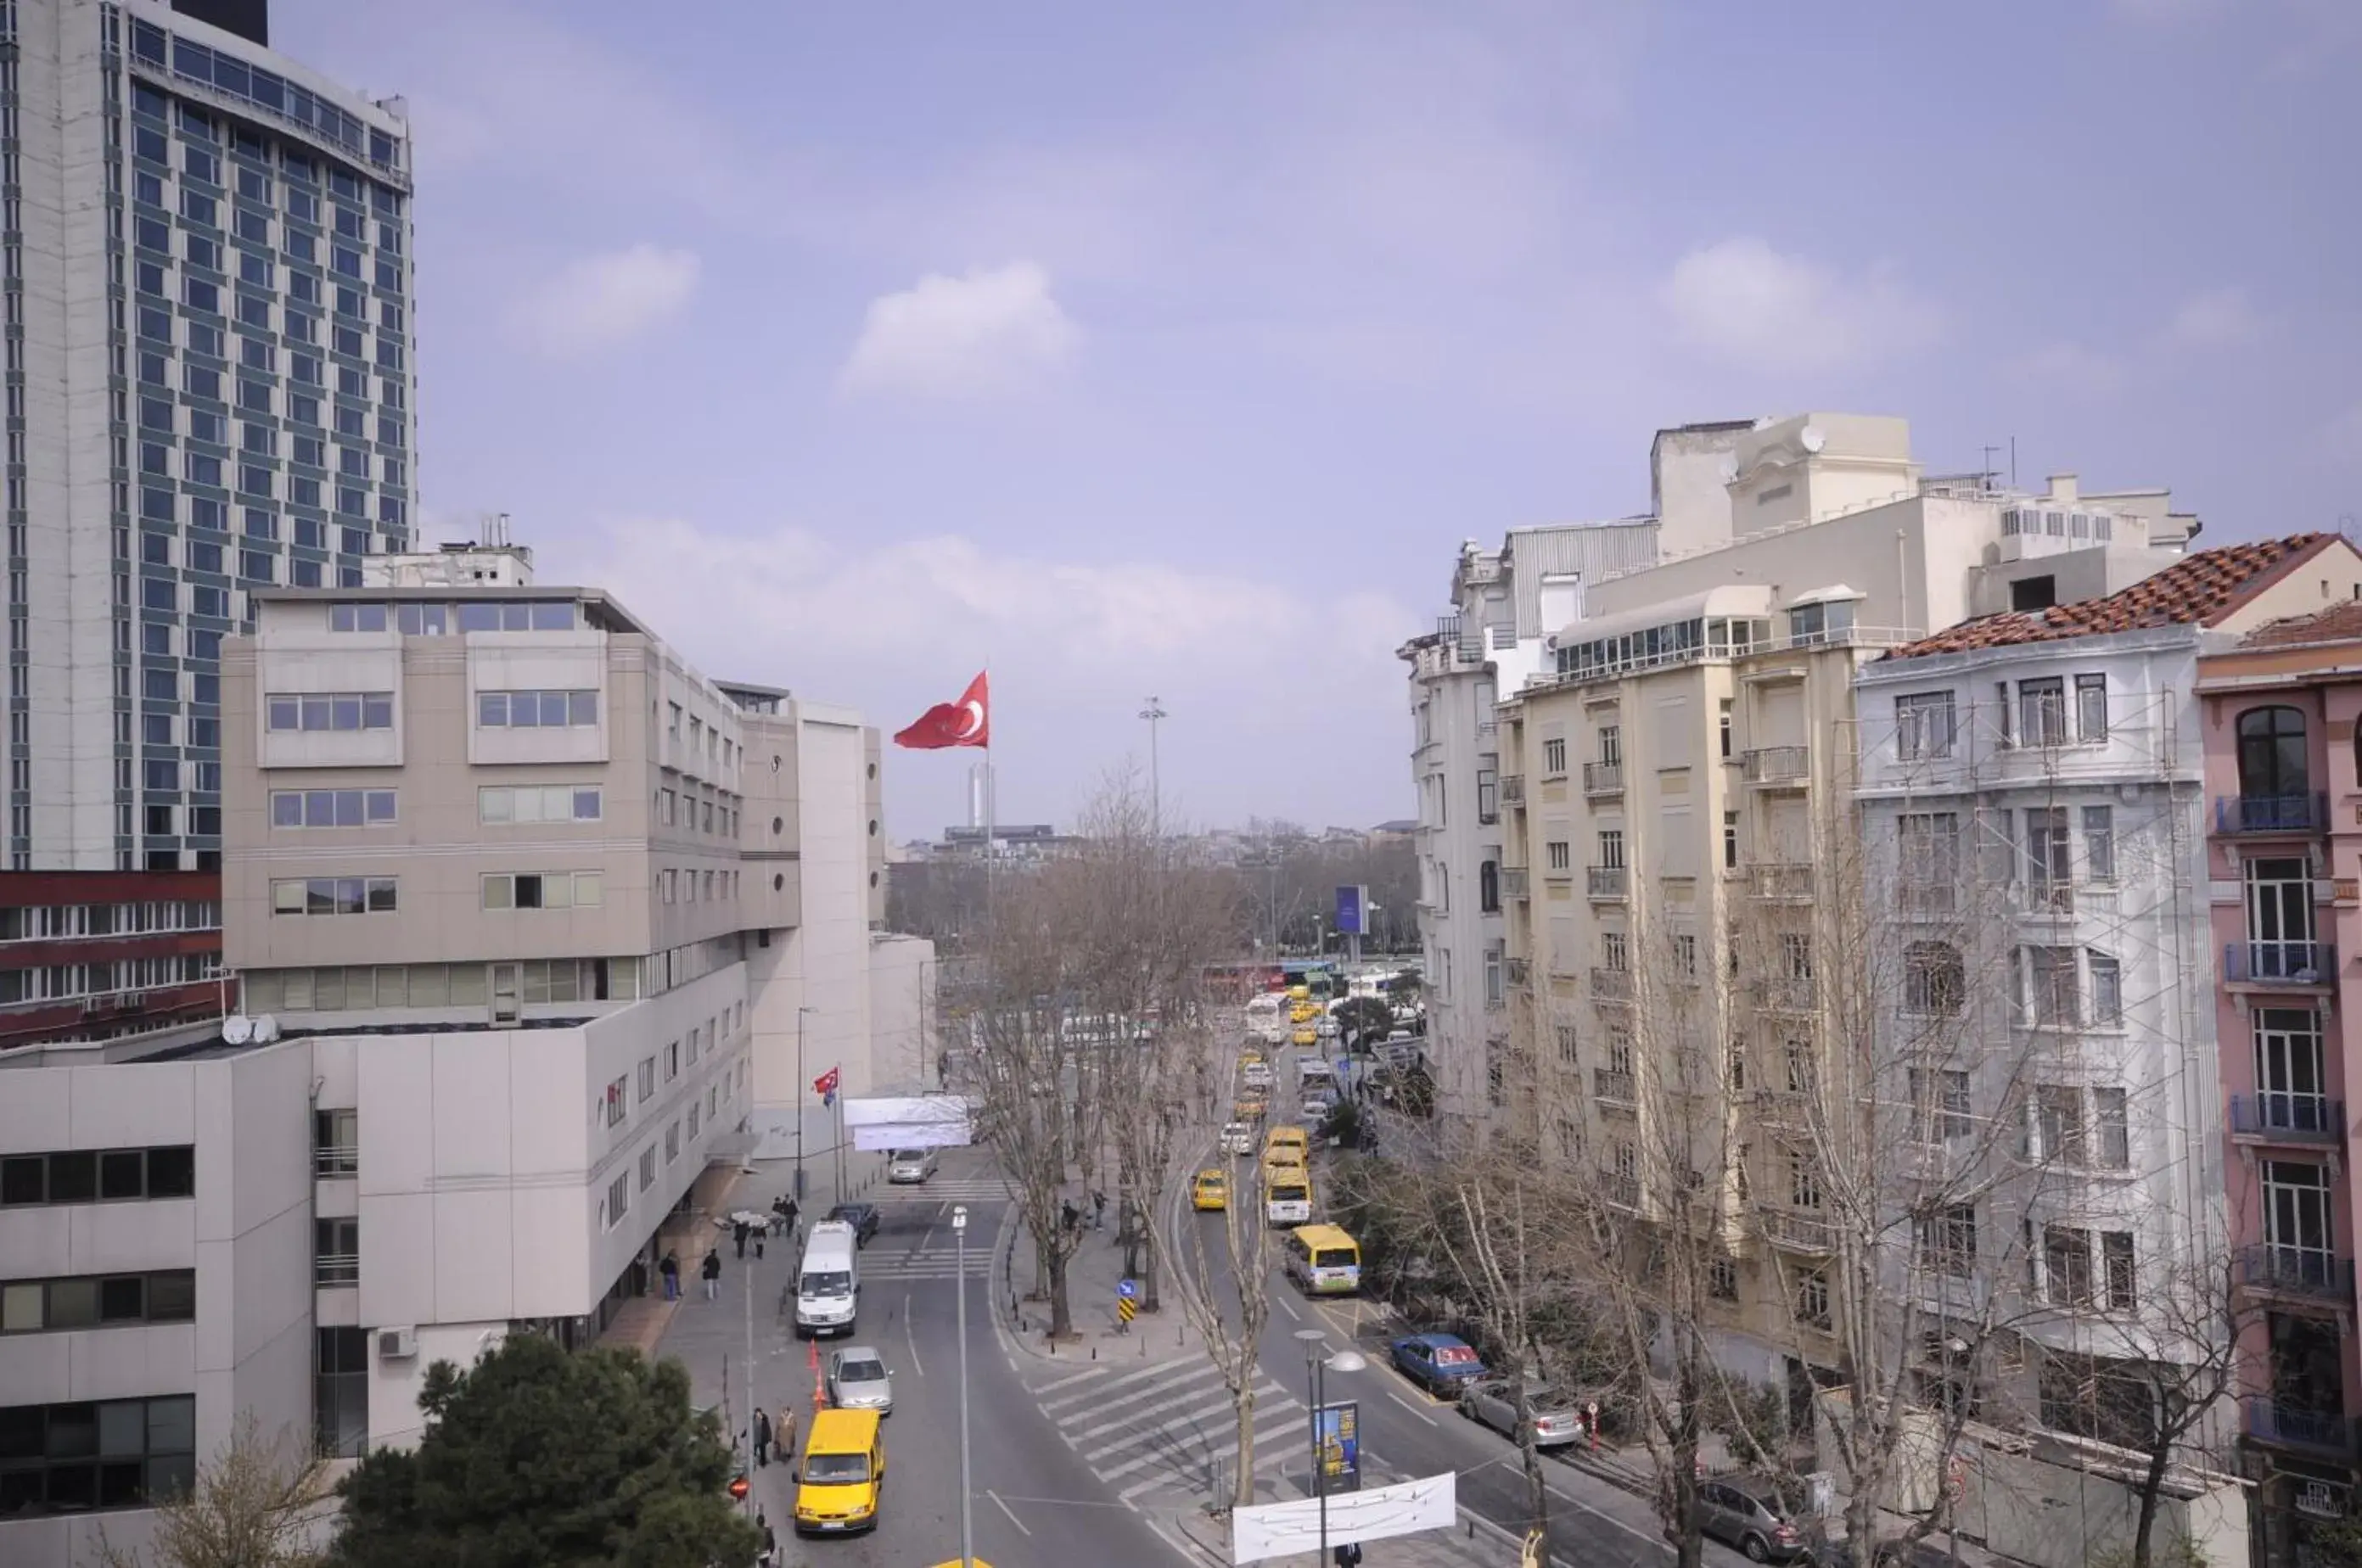 Bird's eye view in Express Star Hotel Taksim